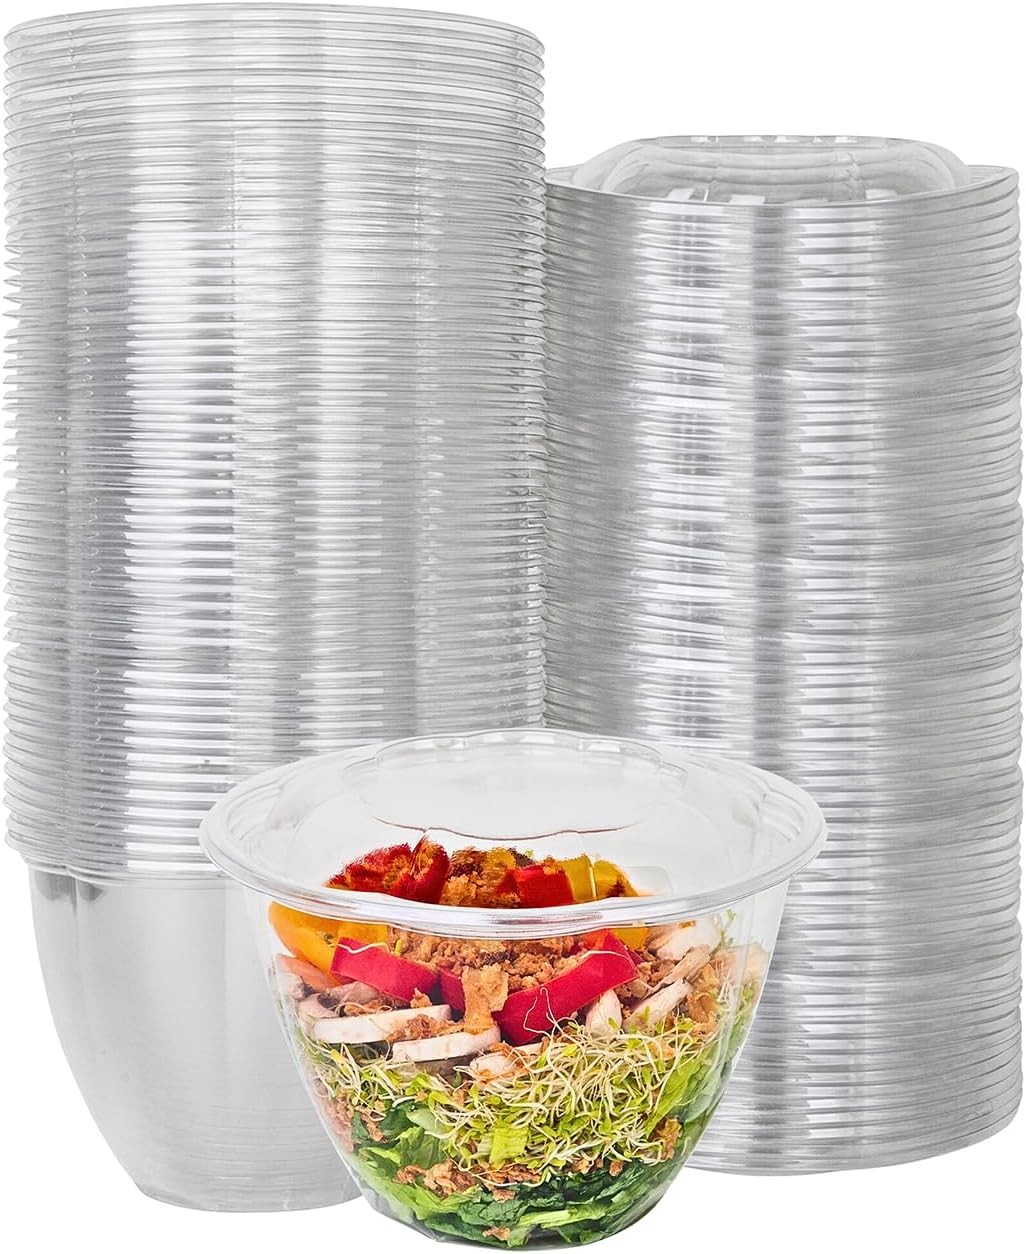 48 oz. Plastic Salad Bowls To Go With Airtight Lids